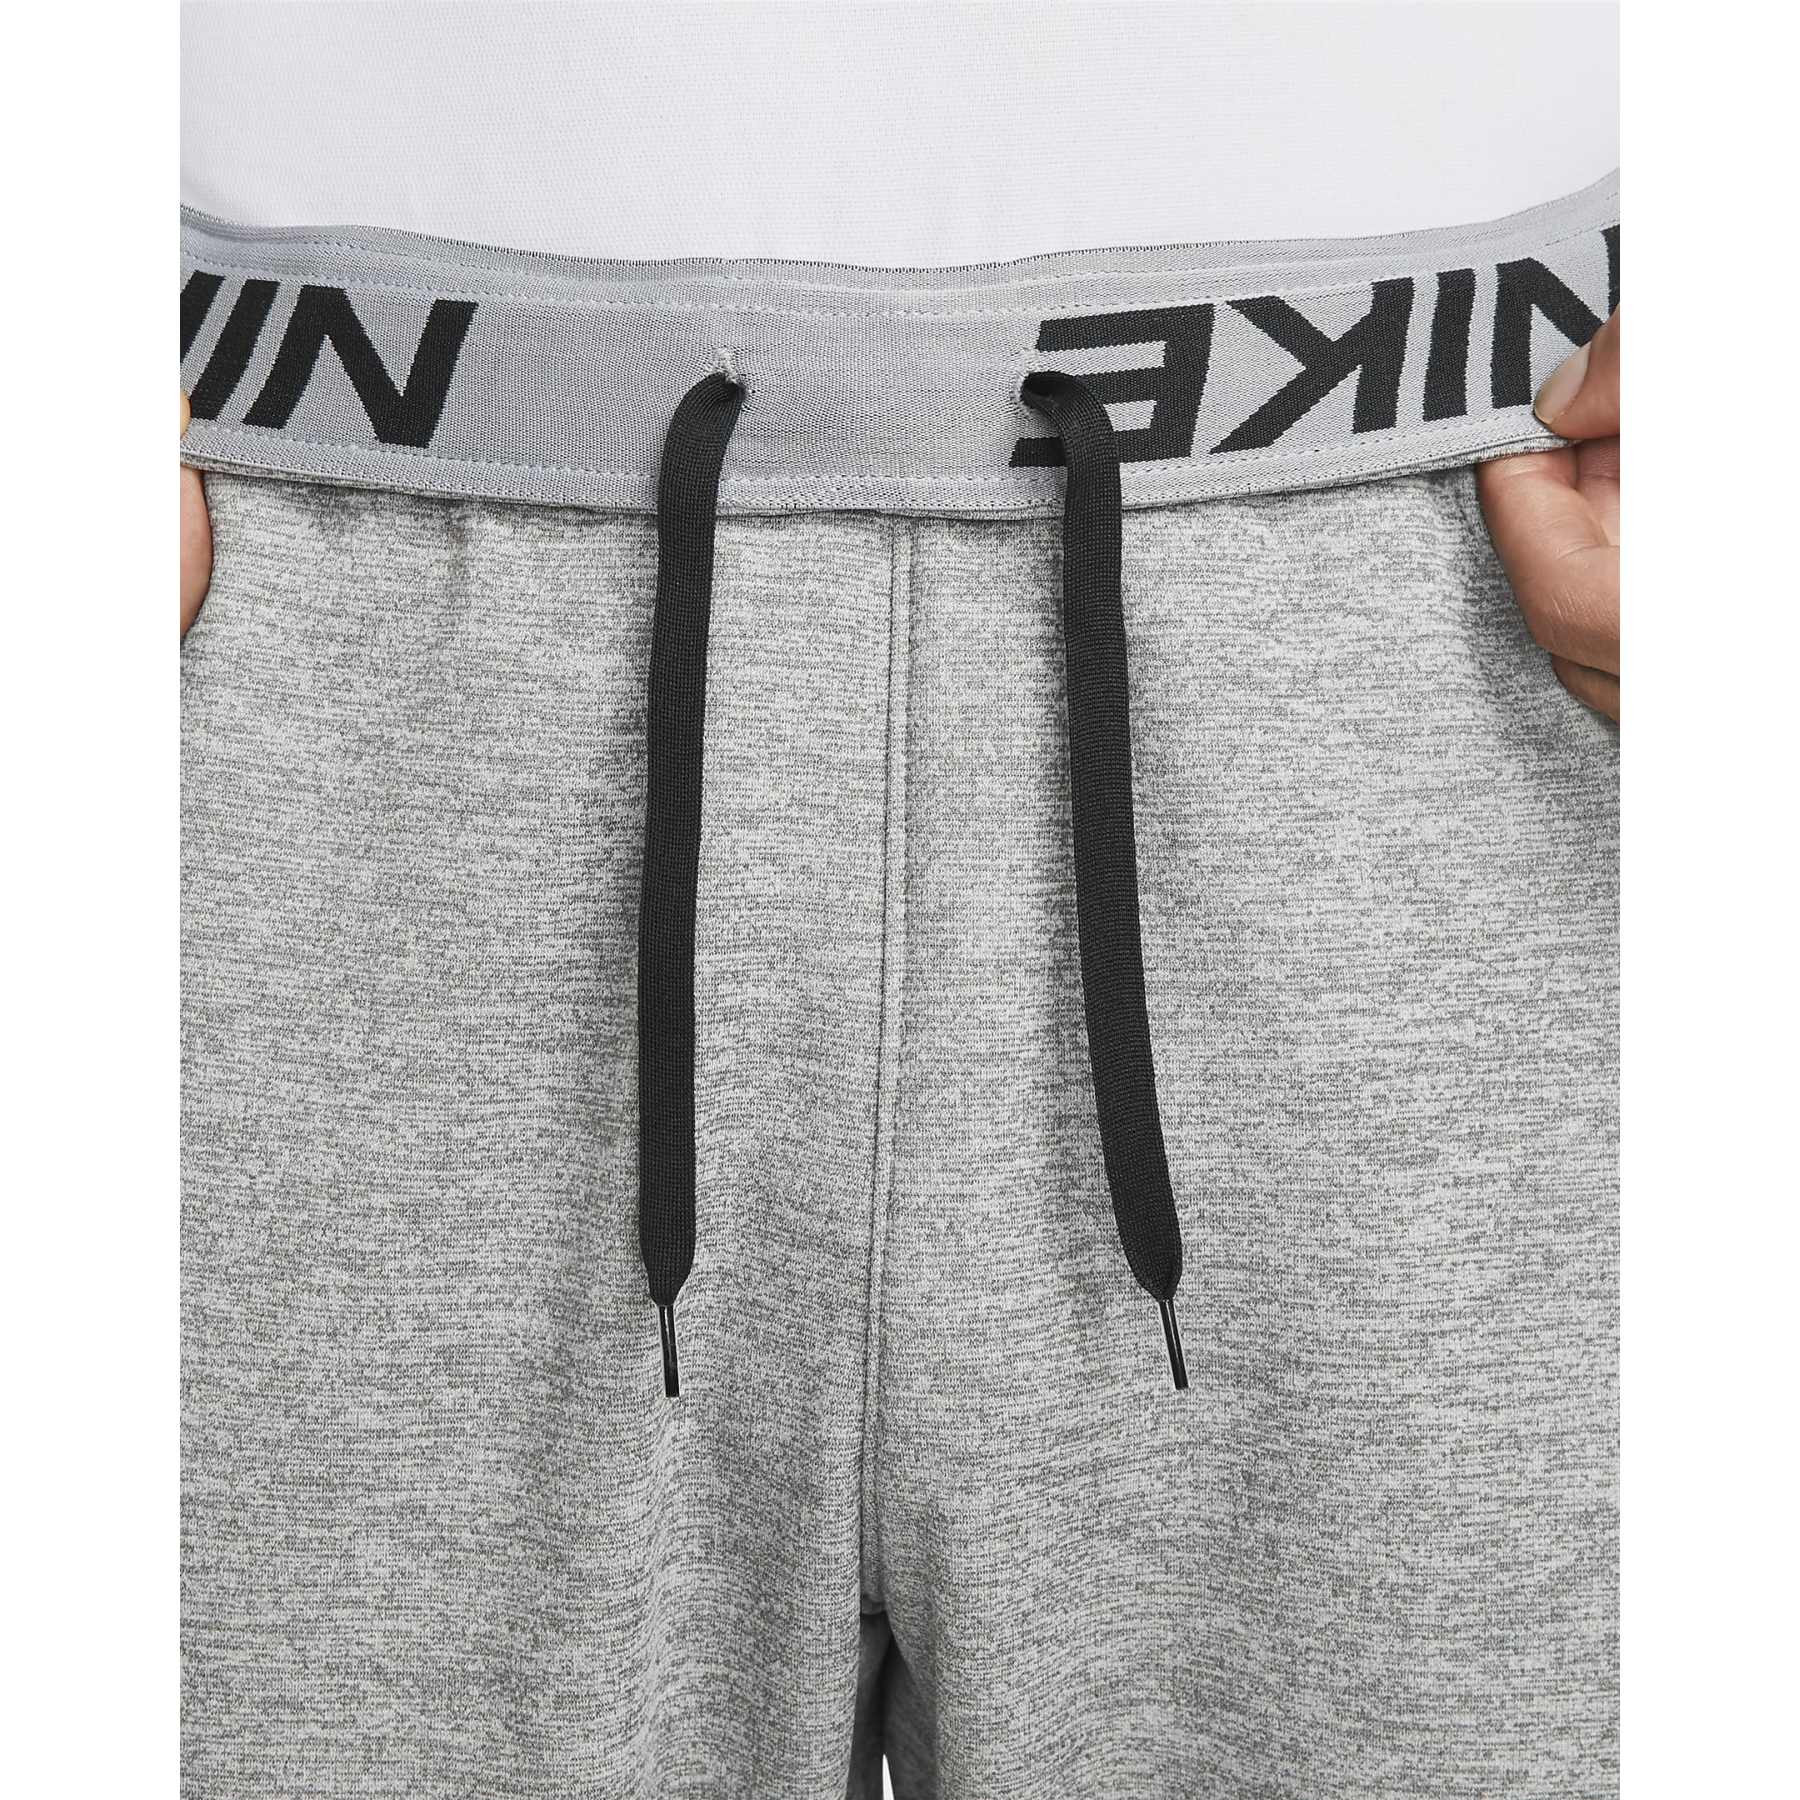 Брюки чоловічі Nike Tapered Fitness Pants (DQ5405-063) DQ5405-063